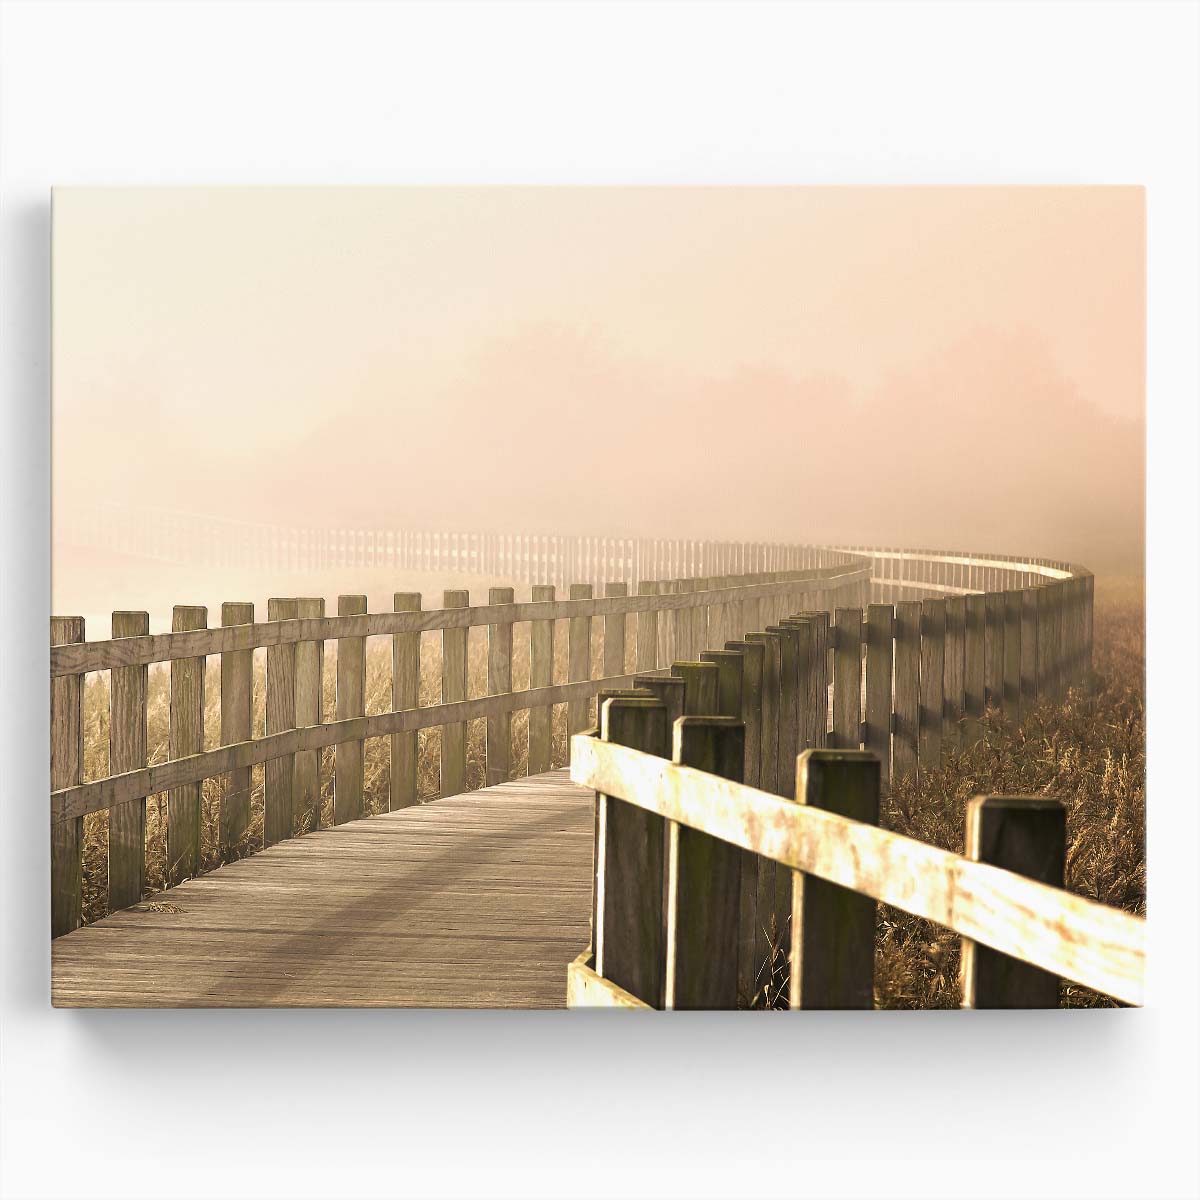 Misty Wooden Bridge Path, Jutland Denmark Wall Art by Luxuriance Designs. Made in USA.